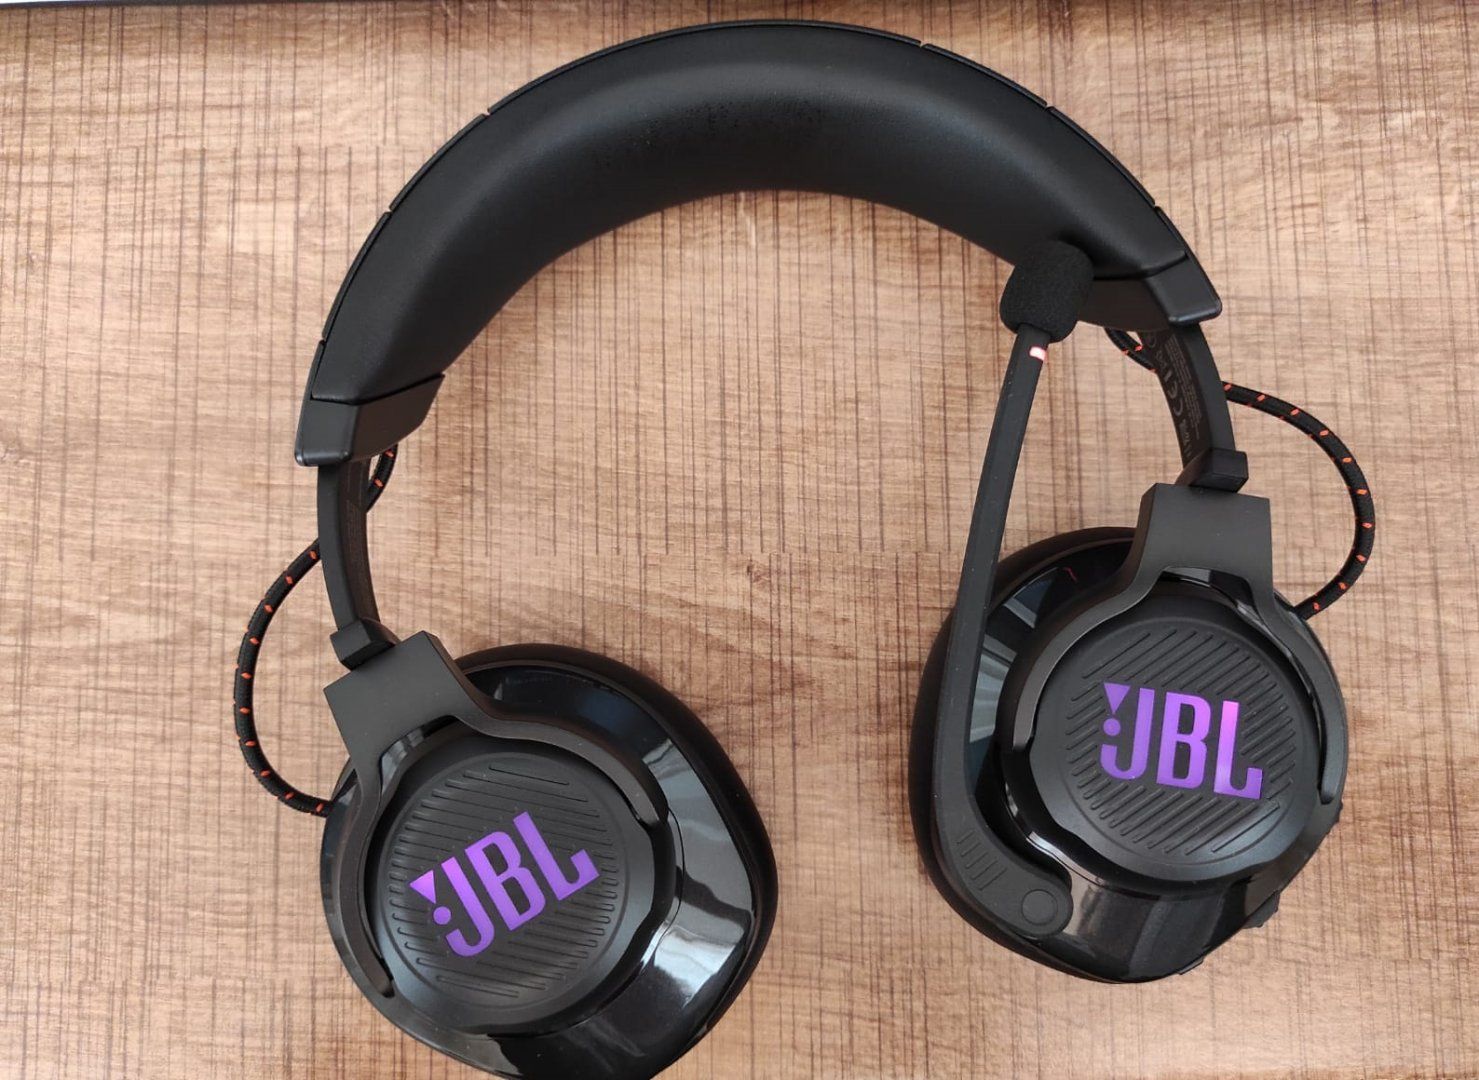 JBL quantum 600 Wireless Gaming headset incelemesi | Technopat Sosyal